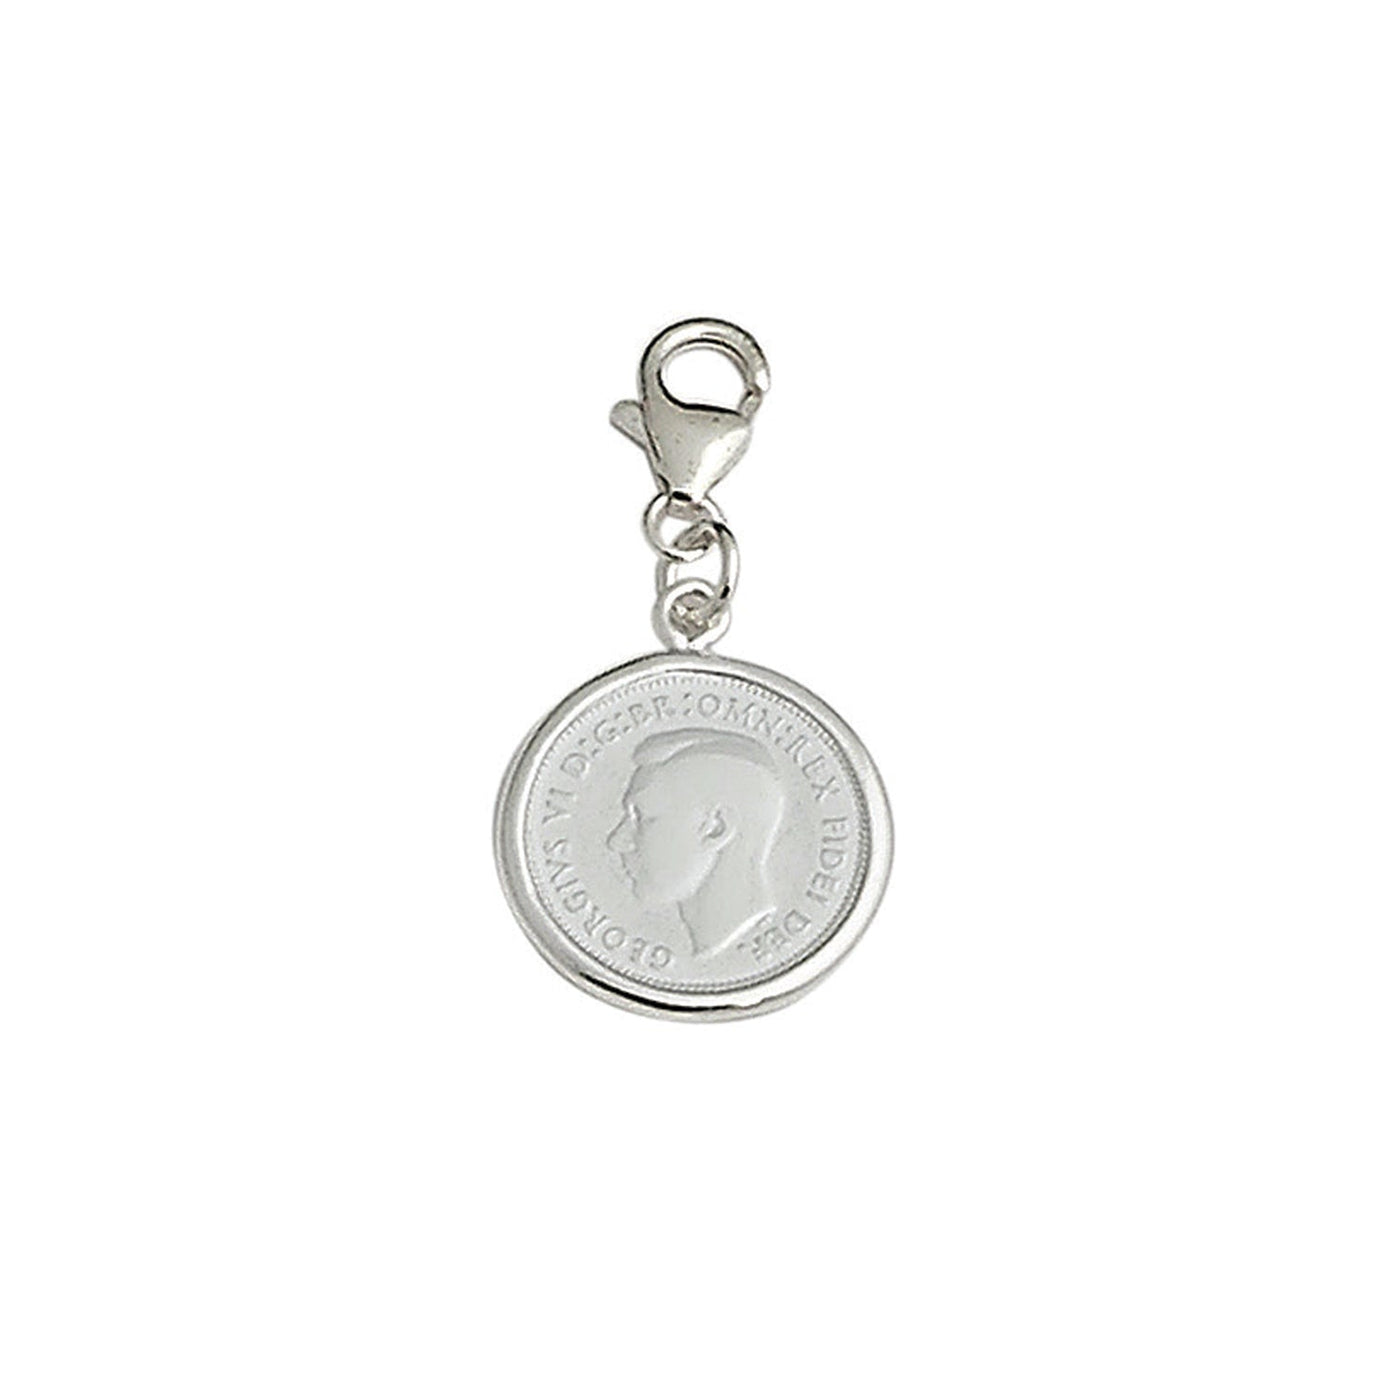 Von Treskow Sixpence coin charm